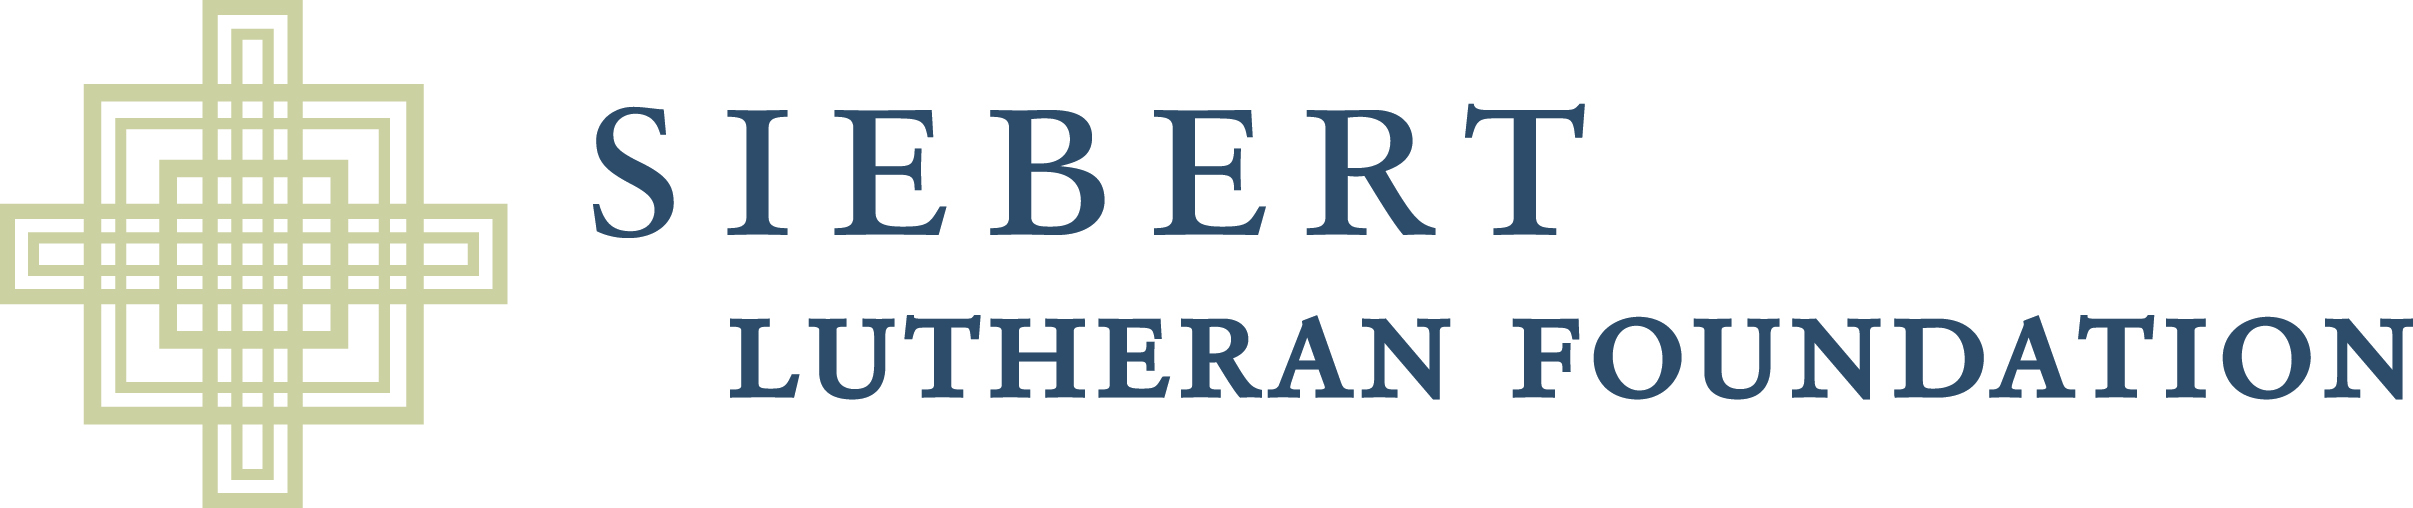 Siebert Lutheran Foundation Inc logo